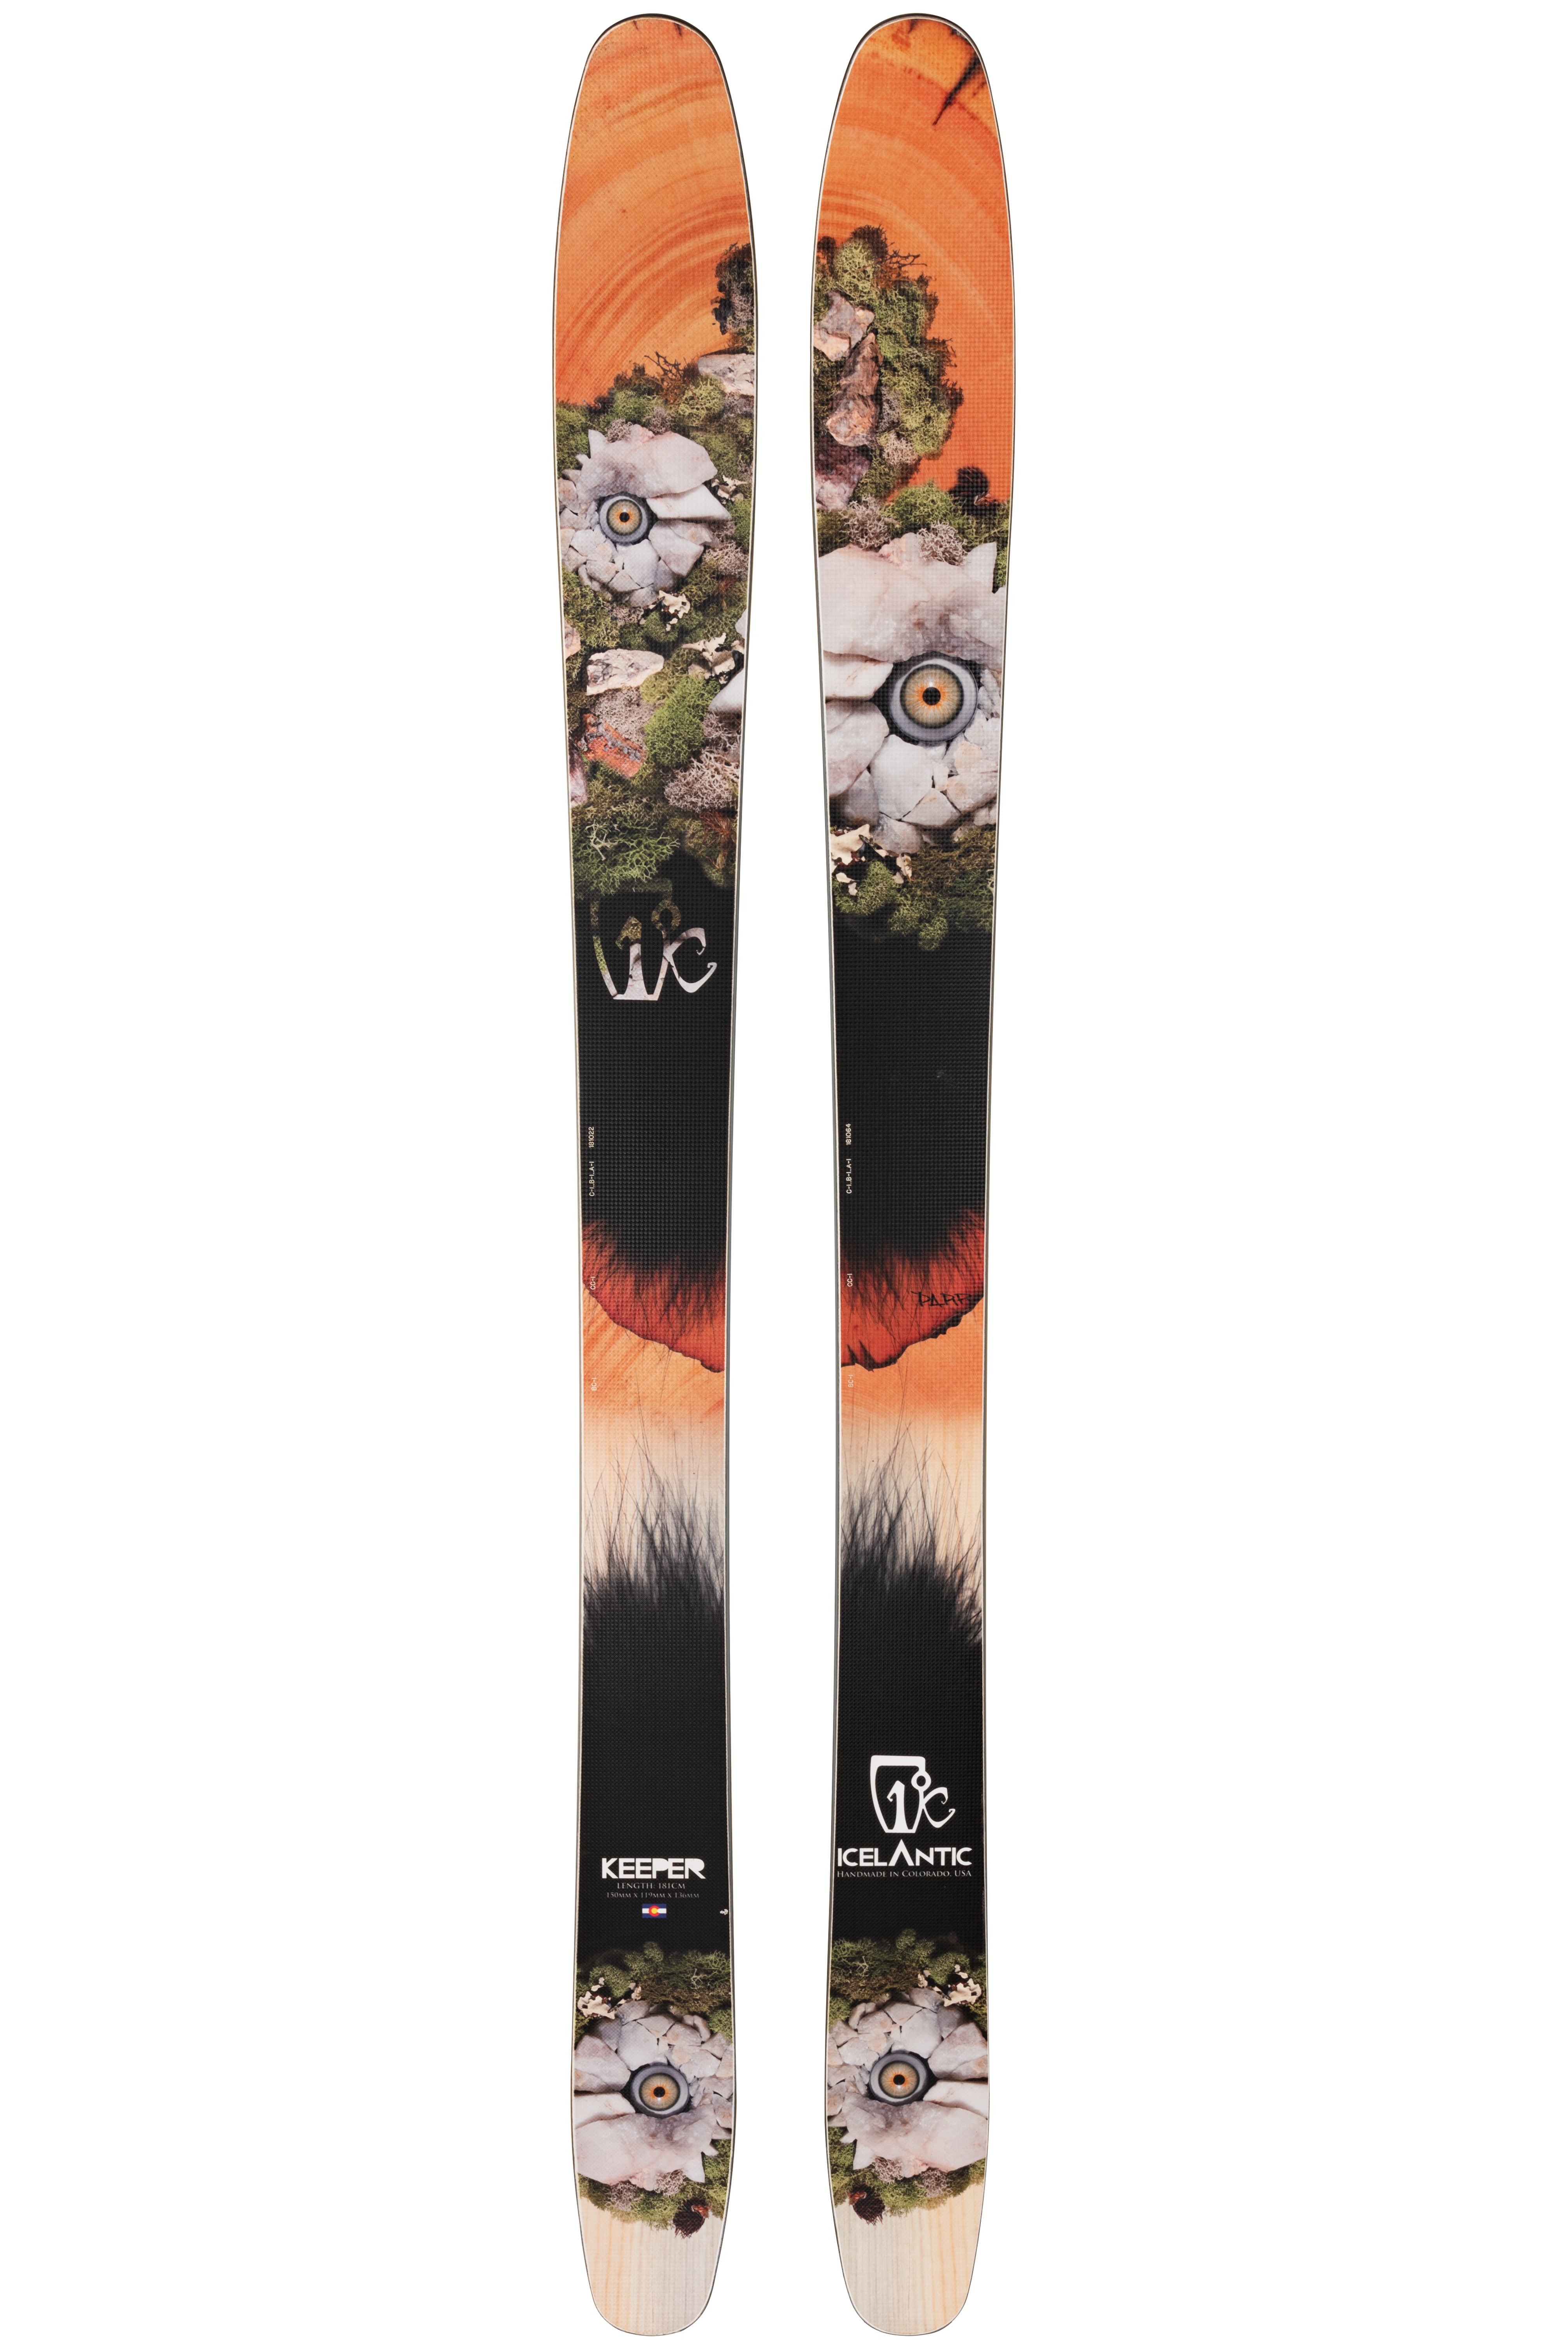 Лыжи для фрирайда Icelantic Keeper 2013/2014 181cm